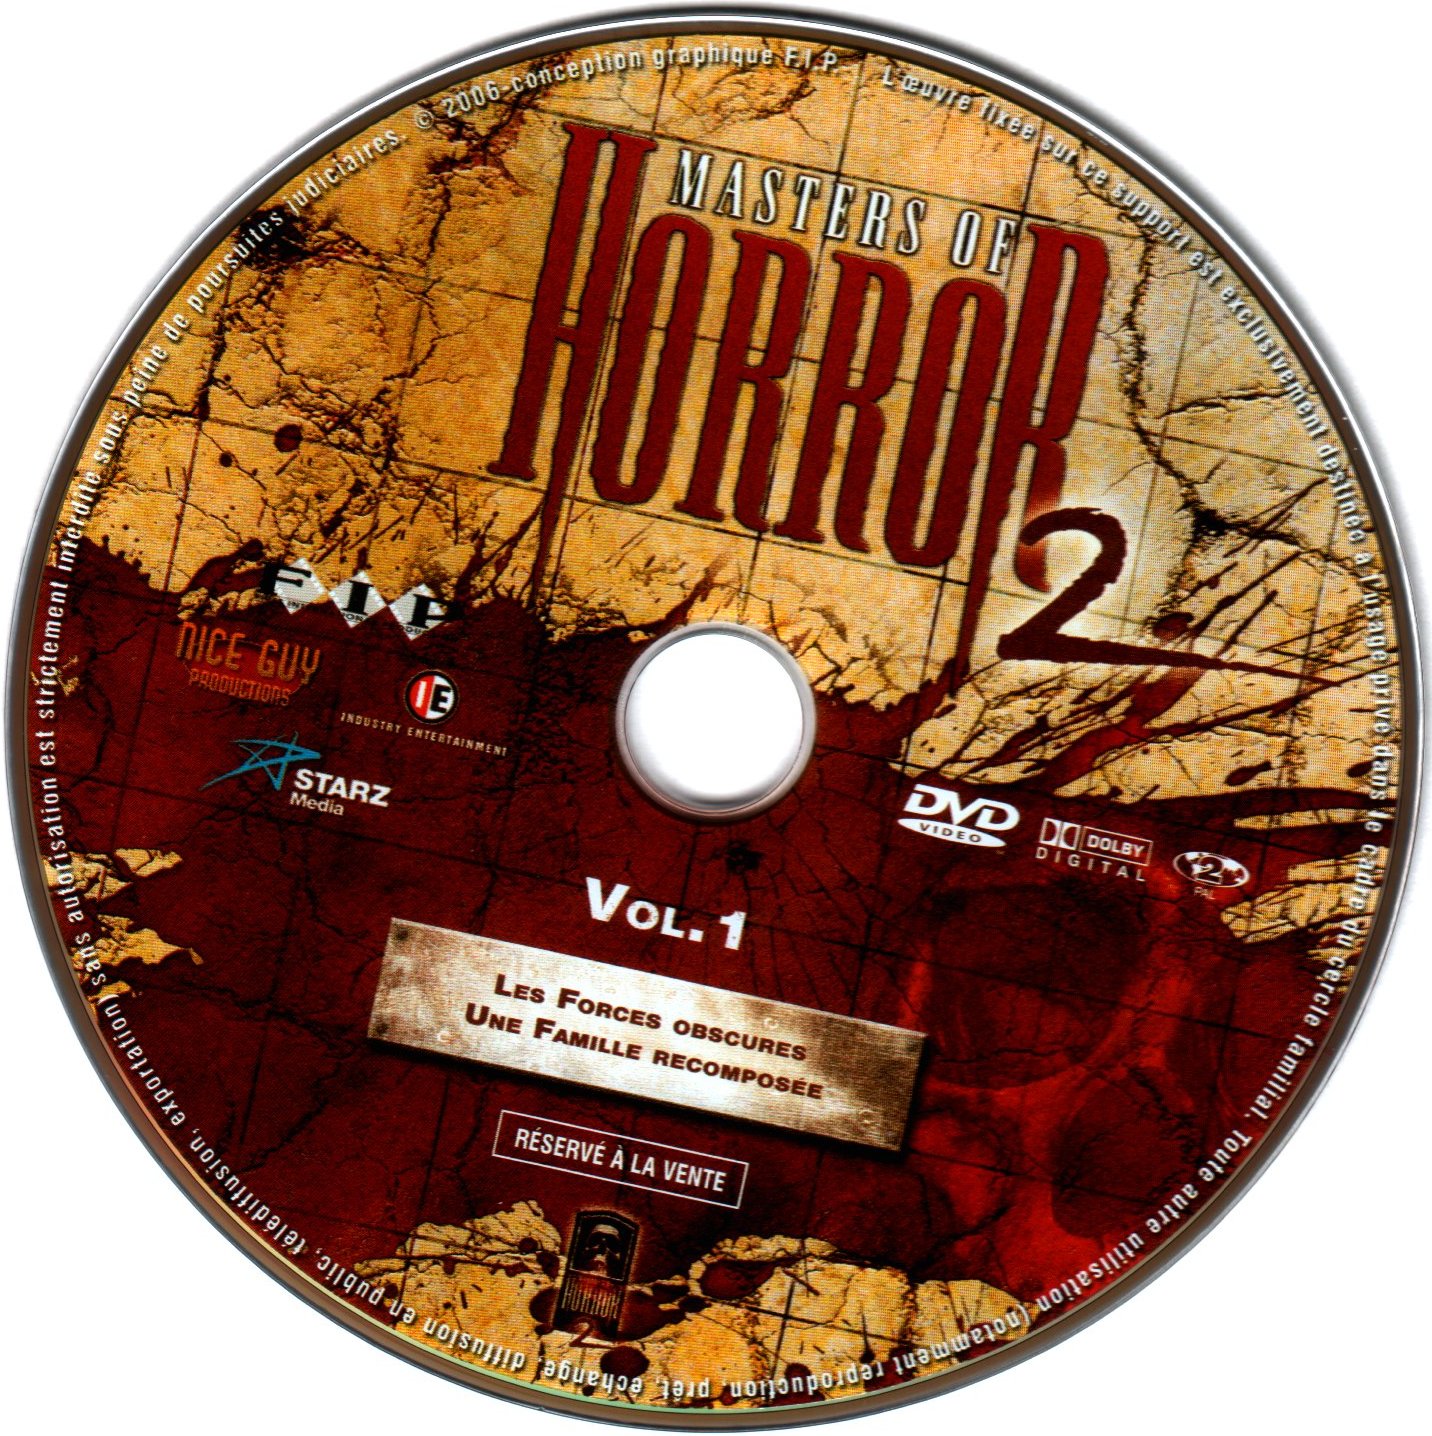 Masters of horror Saison 2 vol 1